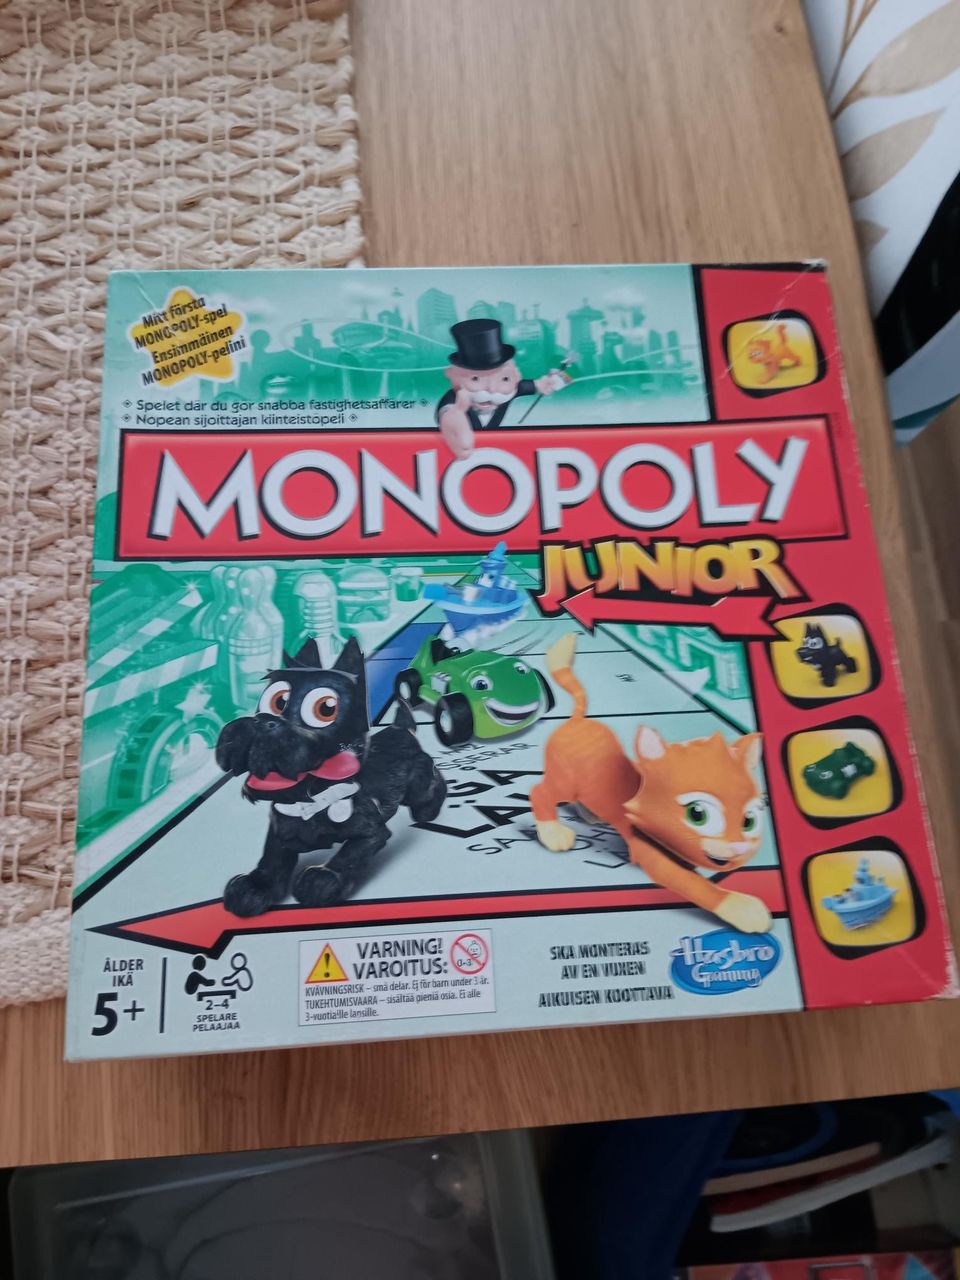 Junior monopoly